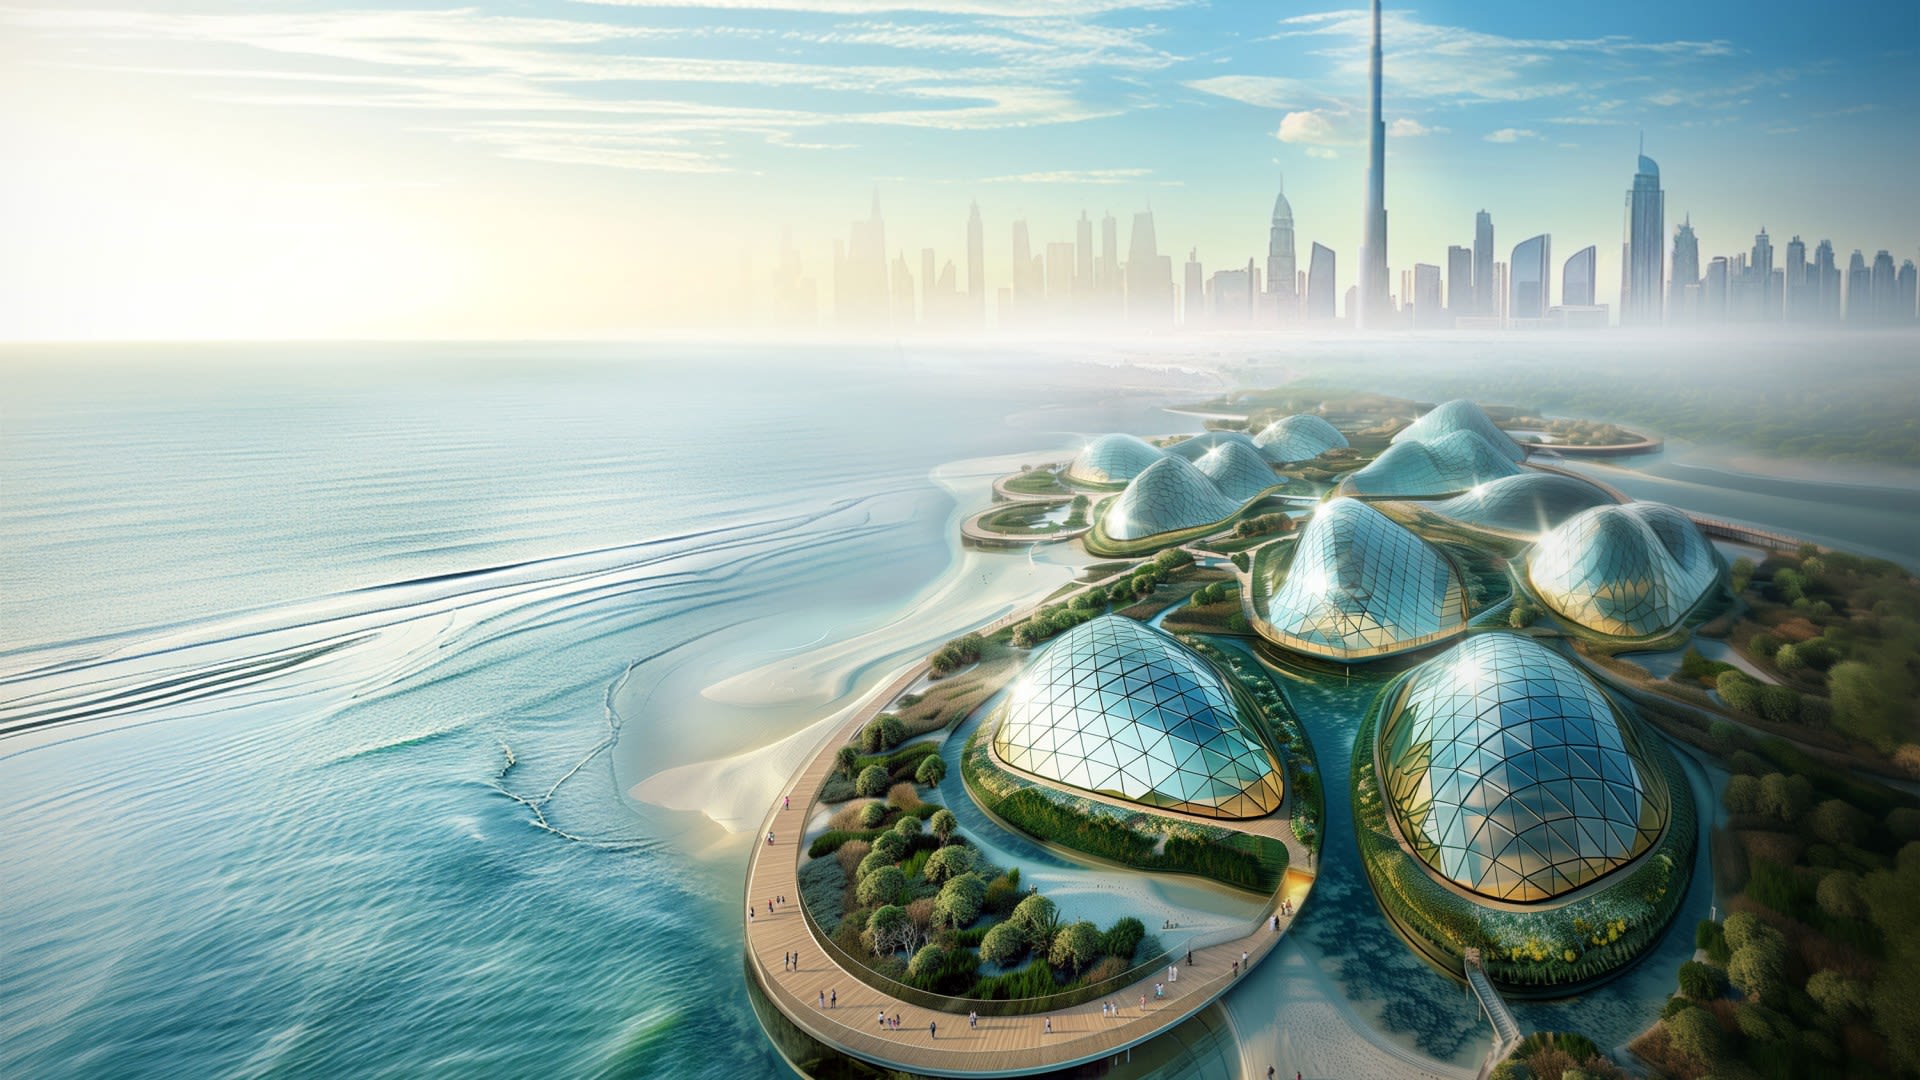 Dubai unveils world’s biggest beach project with futuristic high-tech domes